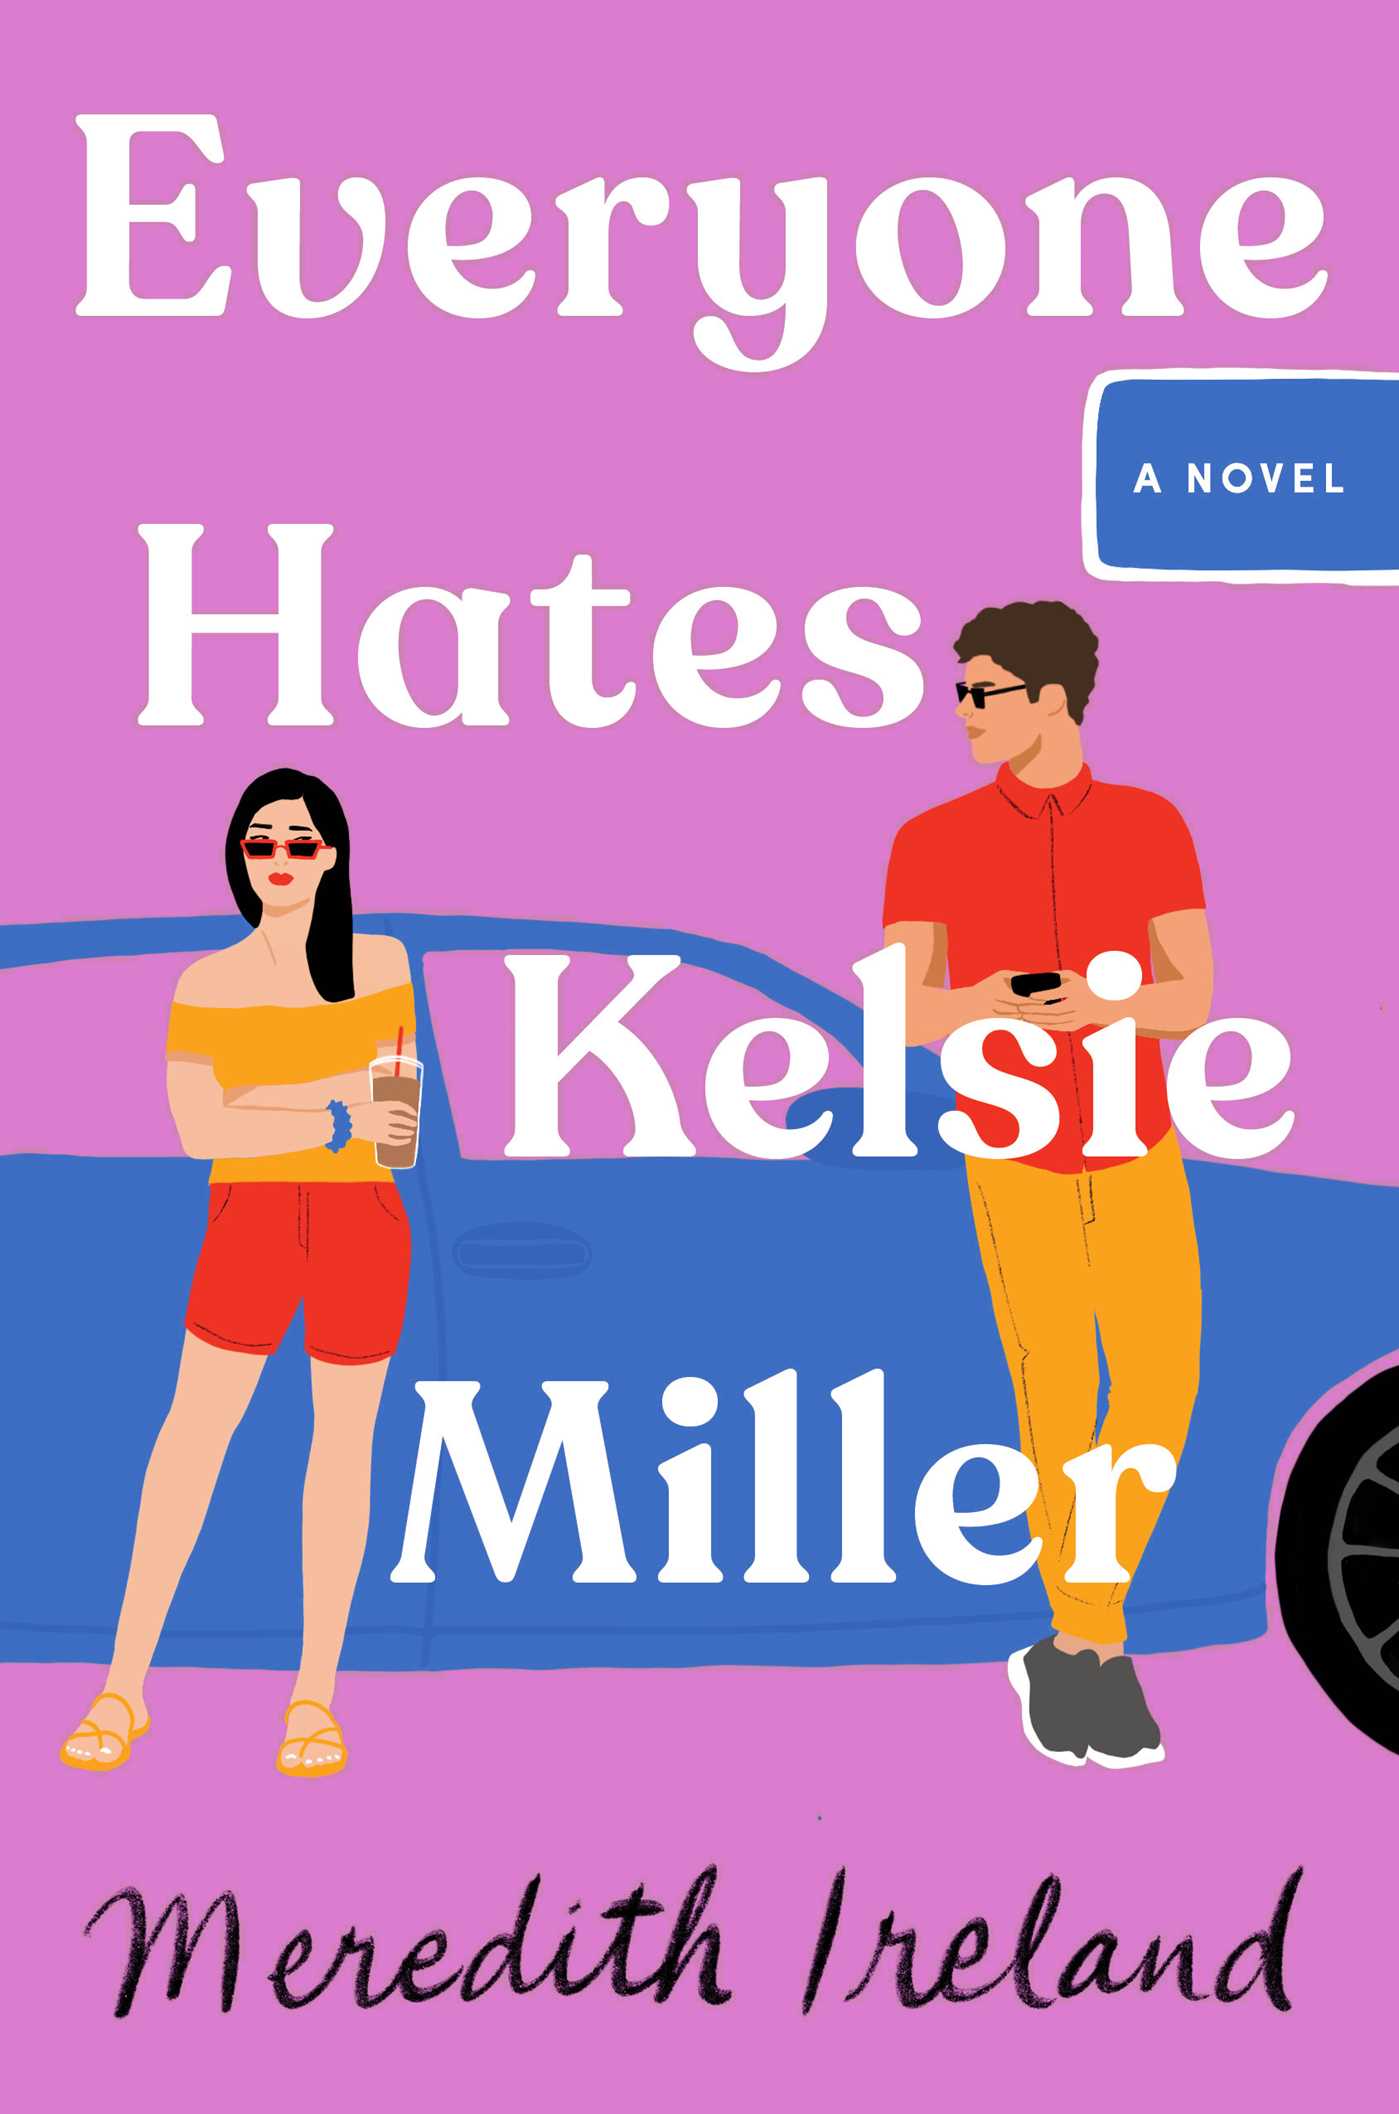 Image for "Everyone Hates Kelsie Miller"